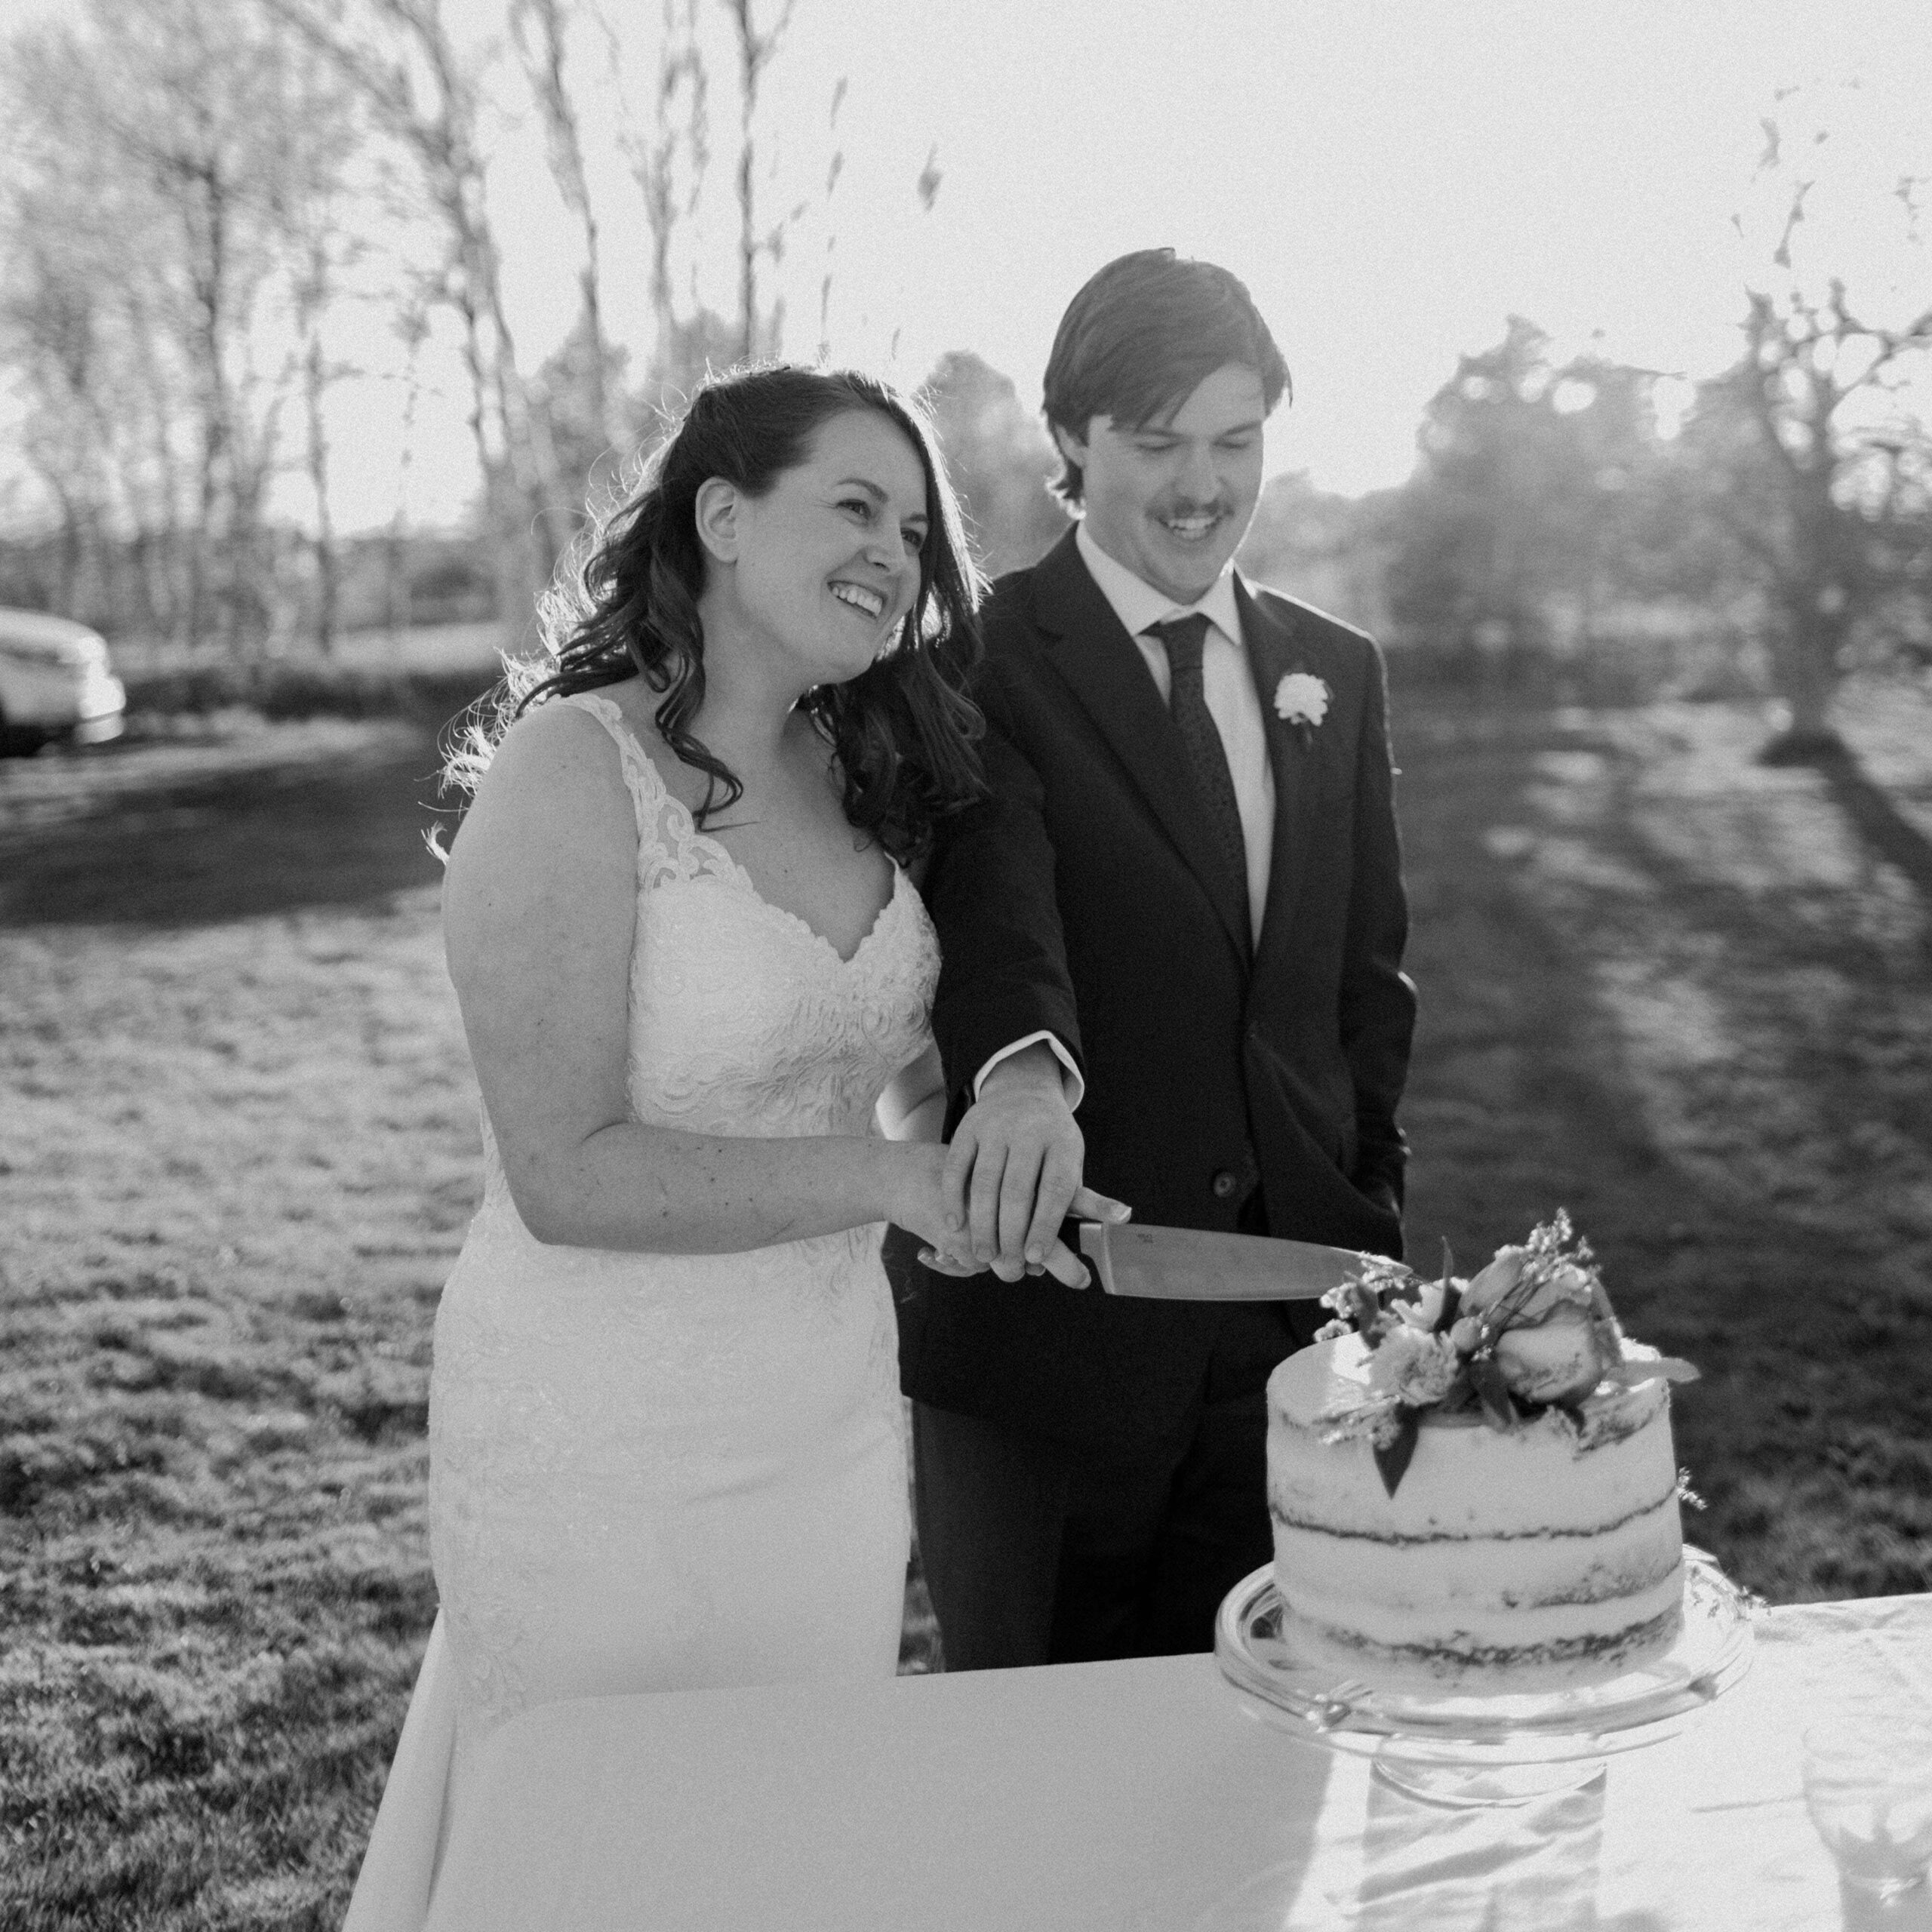 Wedding photographer in PEI - Michaela Bell Photography